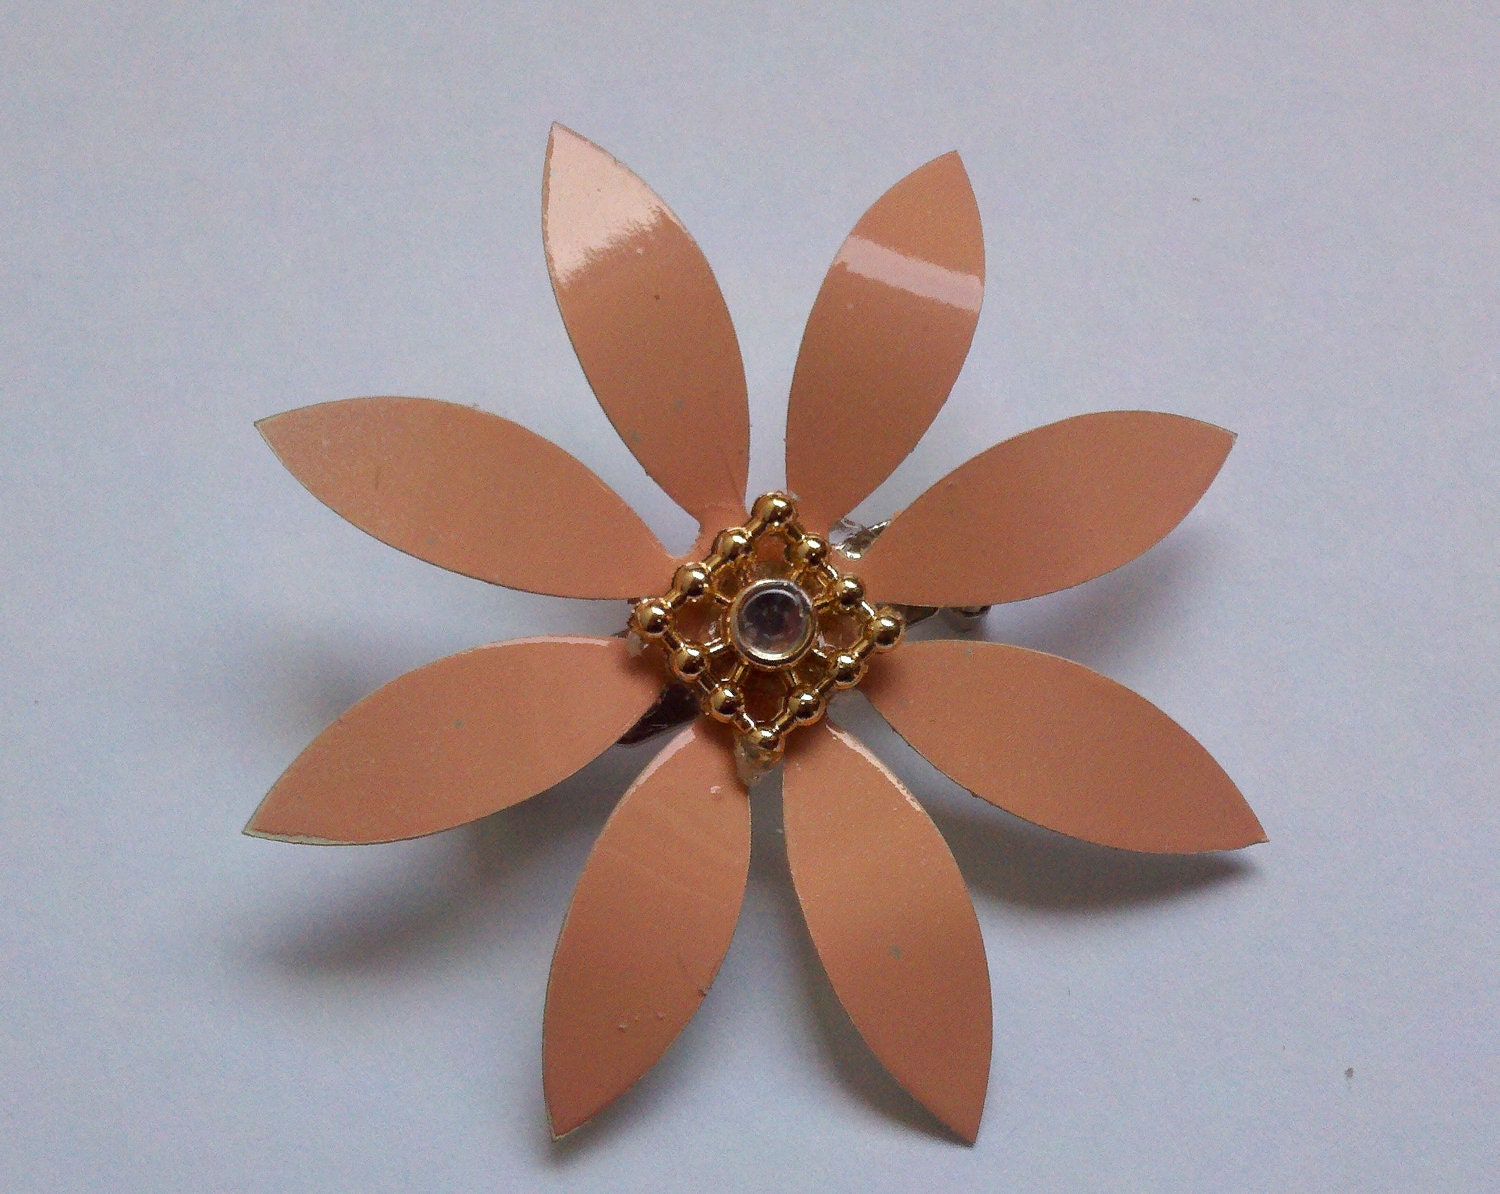 Peach Enamel Flower Brooch Pin - New Small Size Metal Daisy for Wedding Broach Bouquet or Wear